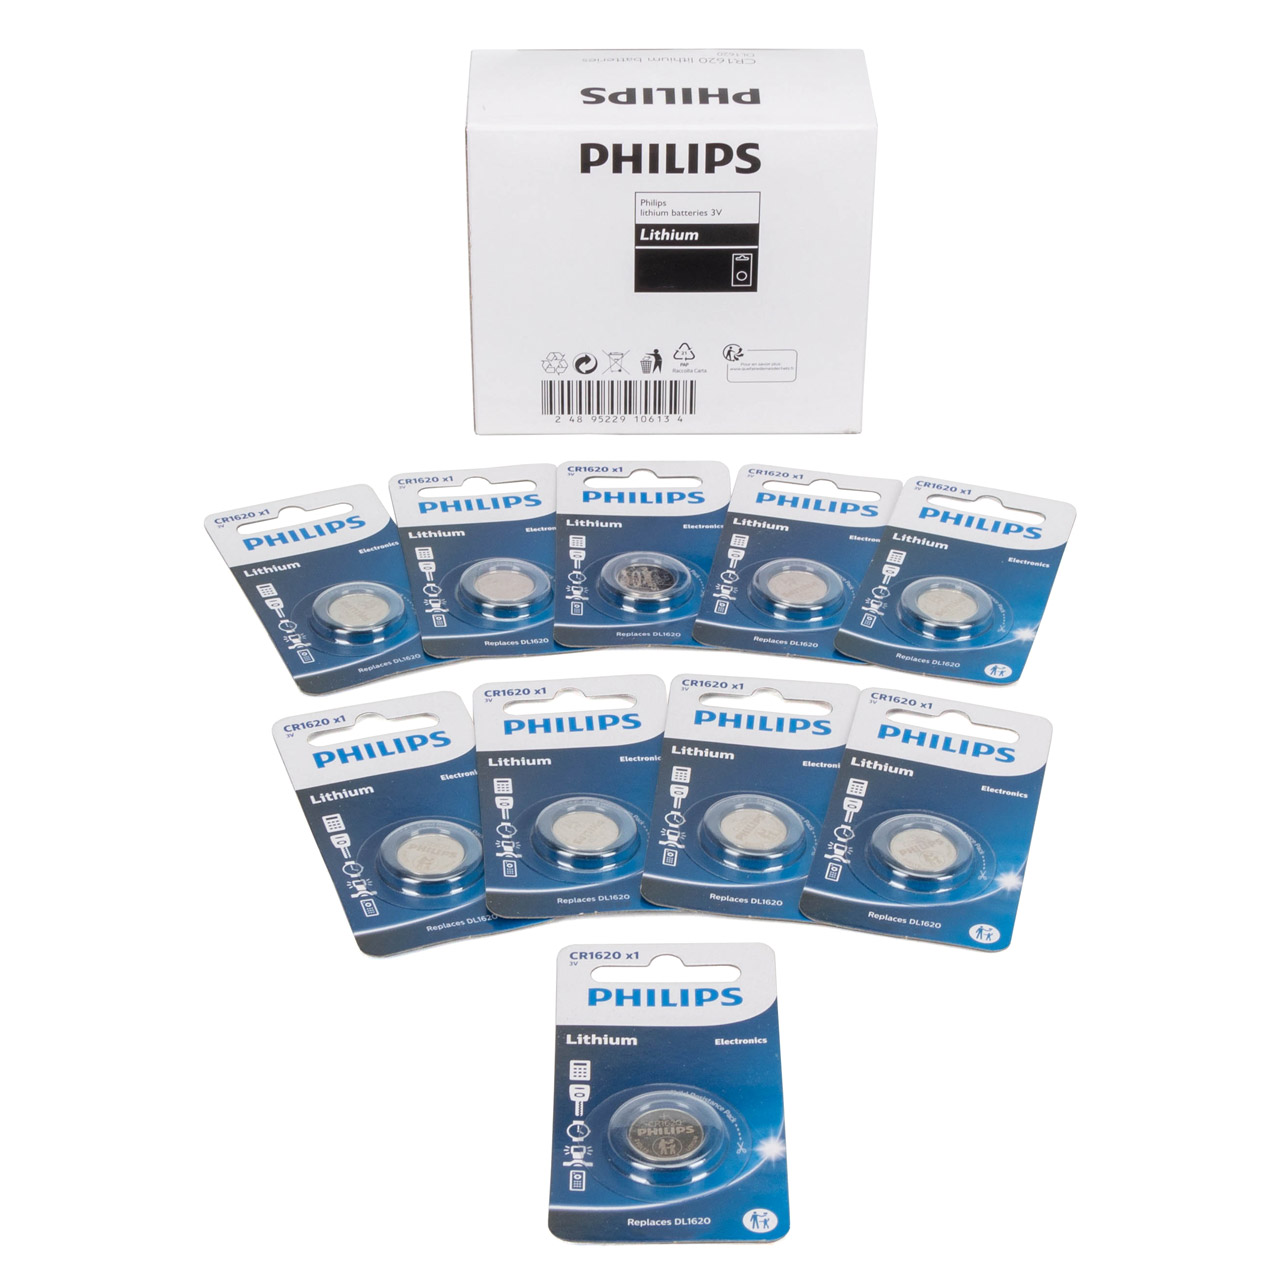 10x PHILIPS Lithium 3V CR1620 DL1620 Knopfzelle Knopfbatterie Batterie (MHD 12.2027)